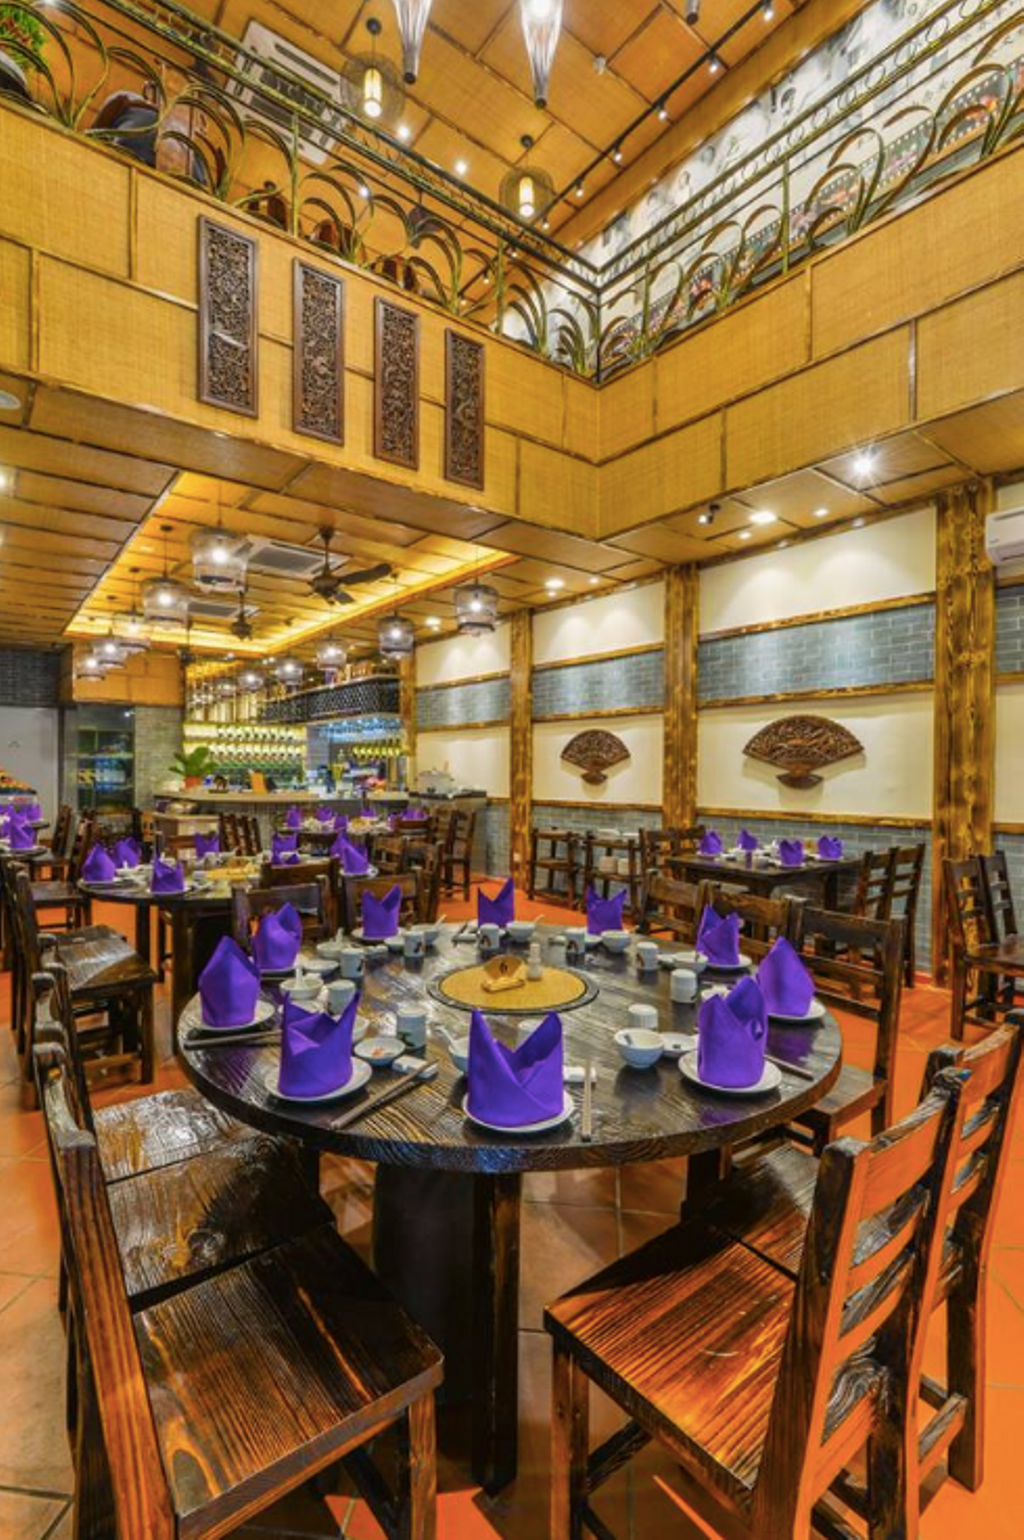 Shun De Gong Restaurant, Bukit Bintang, Commercial, Interior Designer, GI Design Sdn Bhd, Industrial, Traditional, Human, People, Person, Cafe, Restaurant, Shop